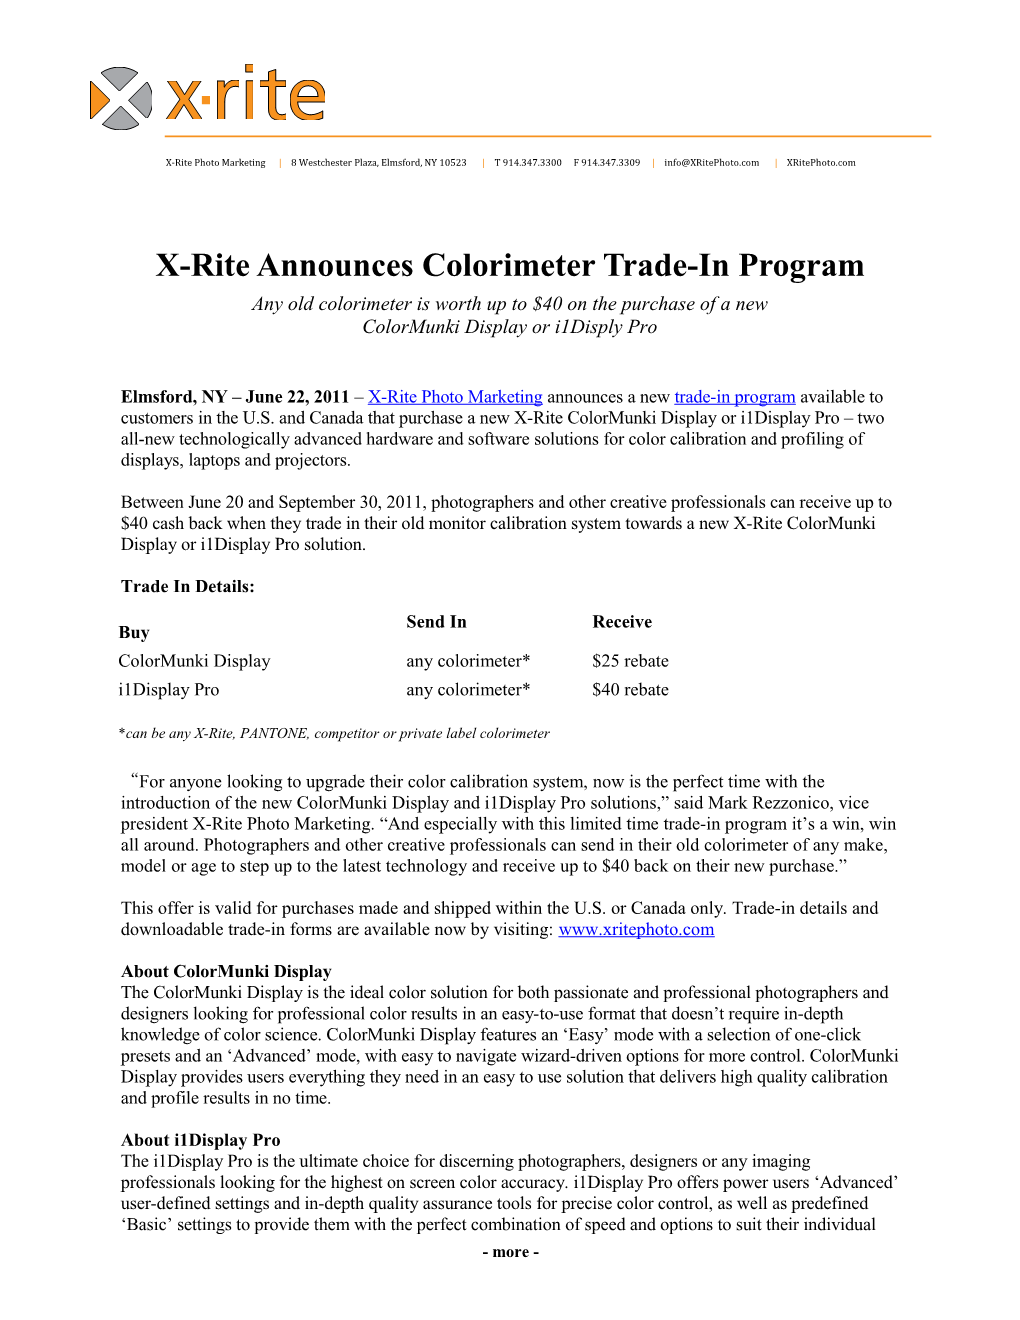 X-Rite Trade-In Program